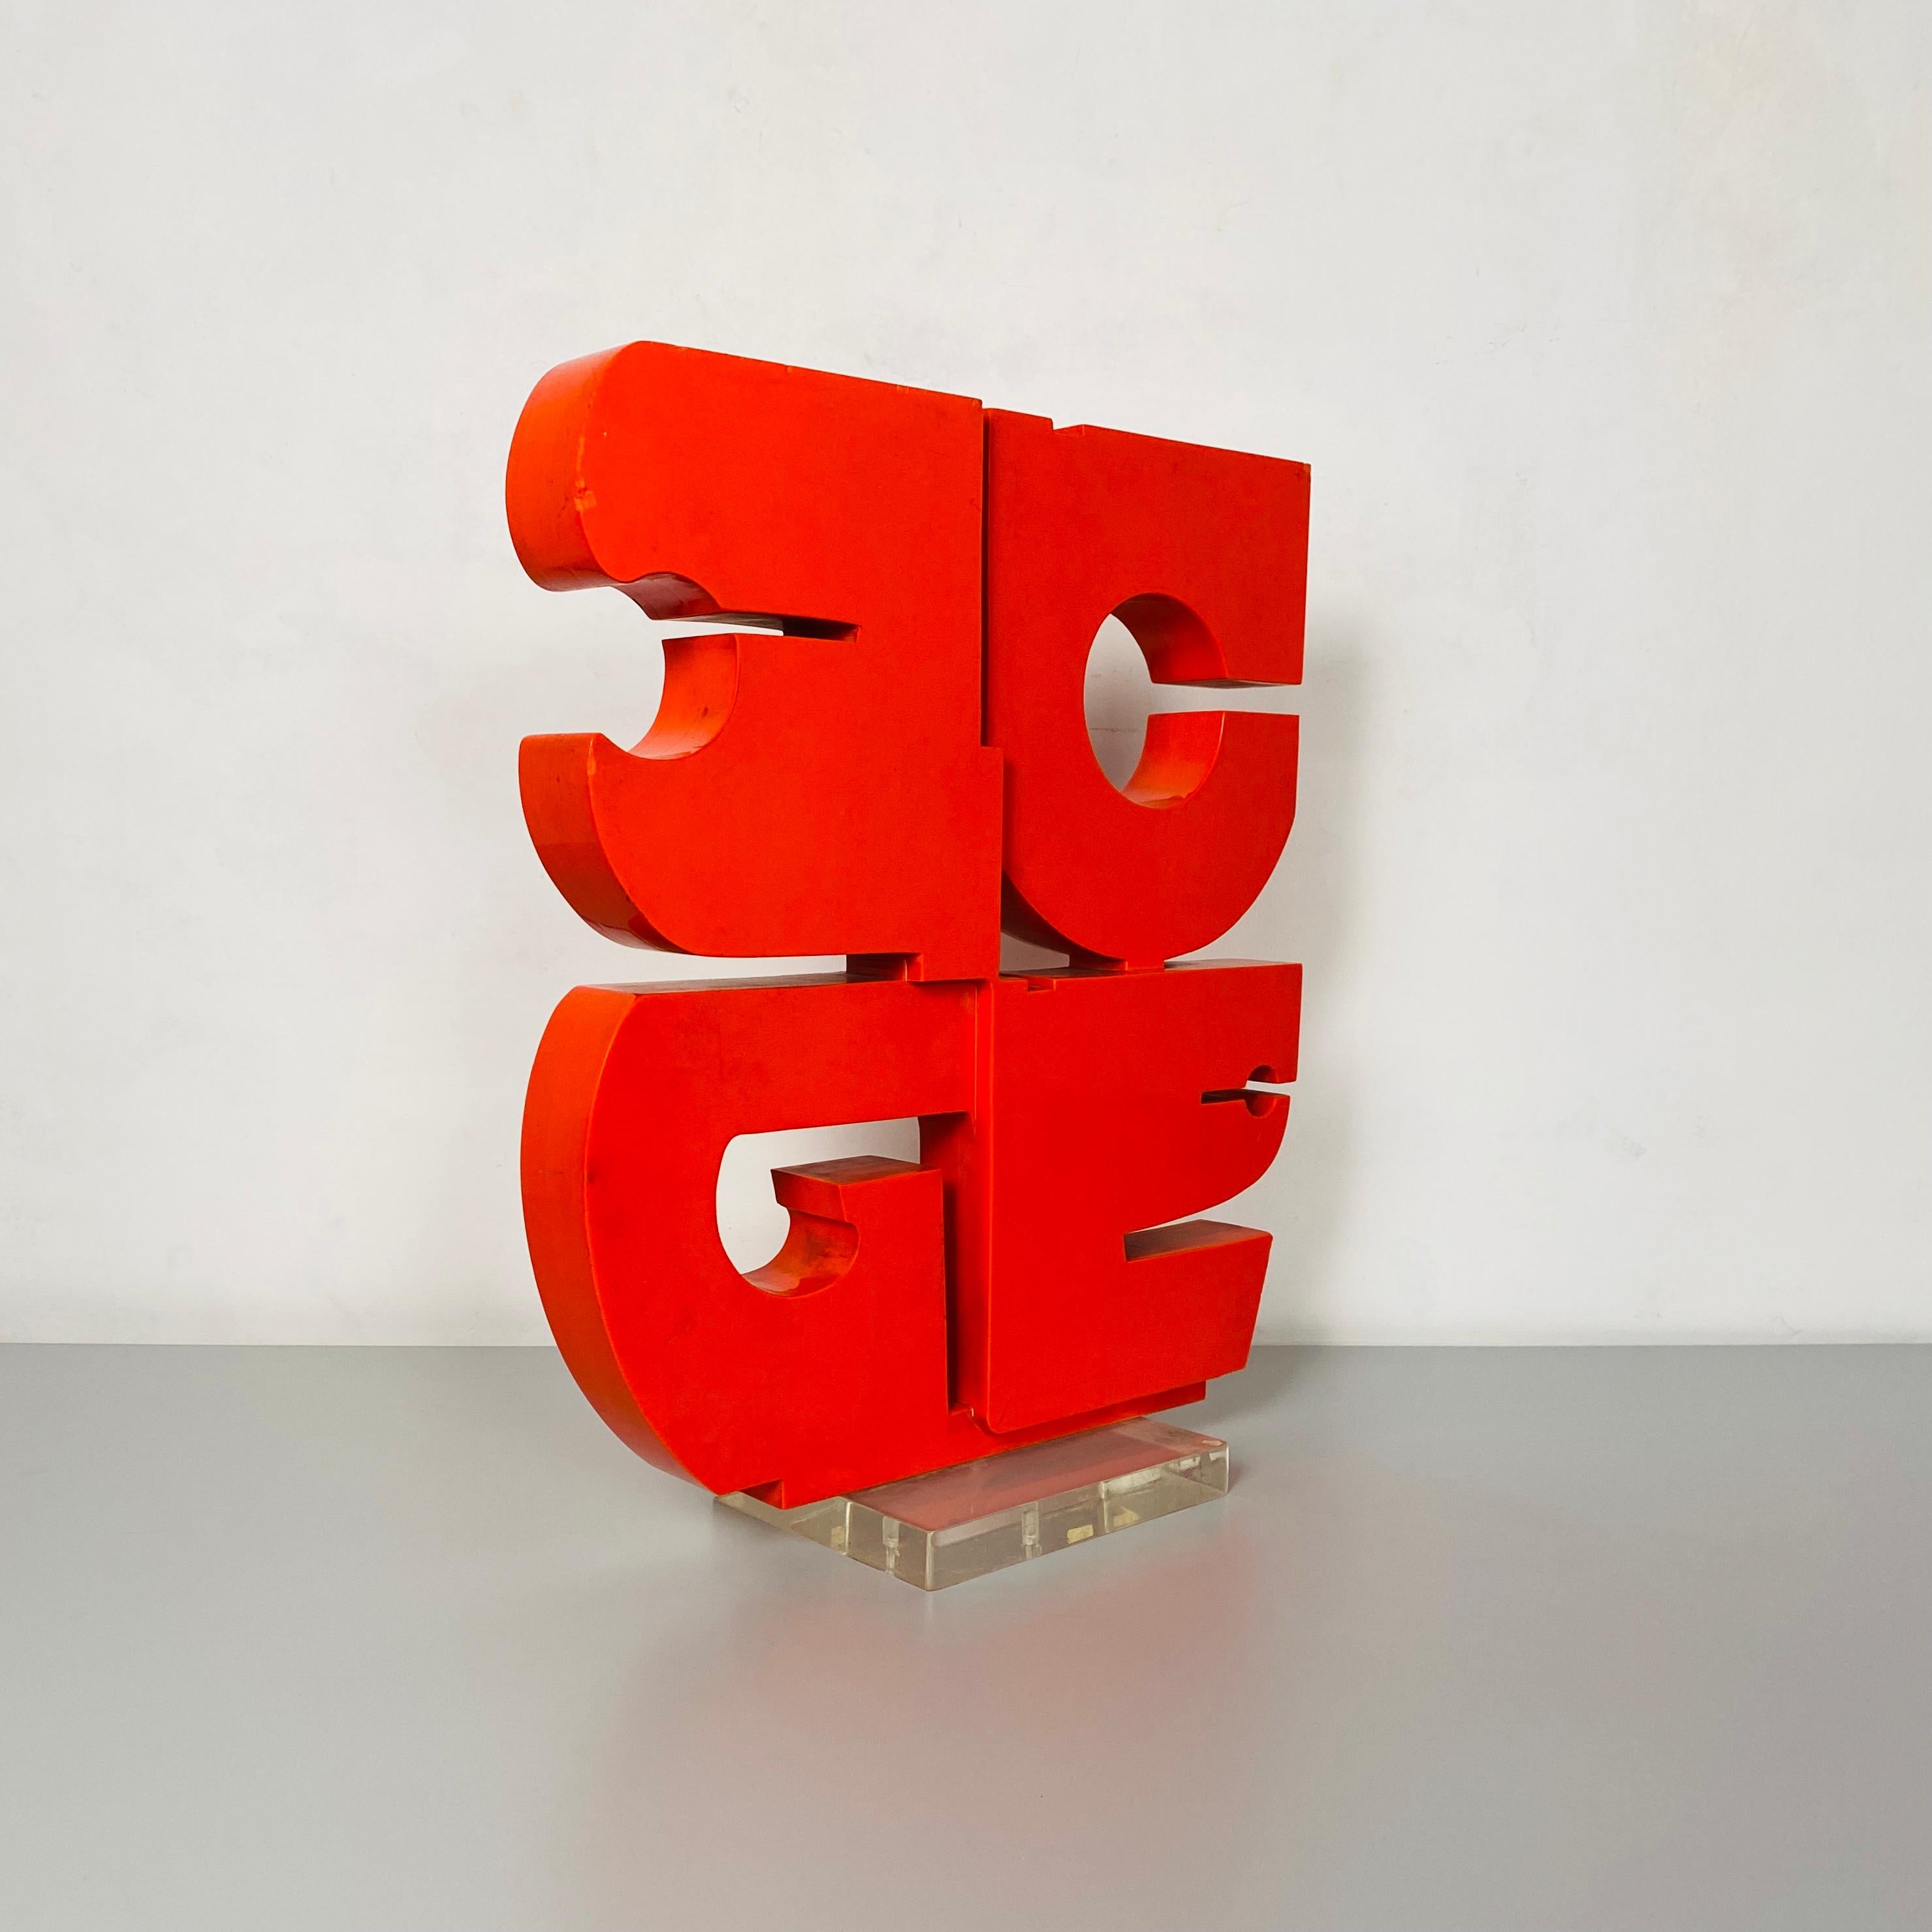 Late 20th Century Italian Mid-Century Modern Red Plexiglass Sculpture by Edmondo Cirillo, 1970s